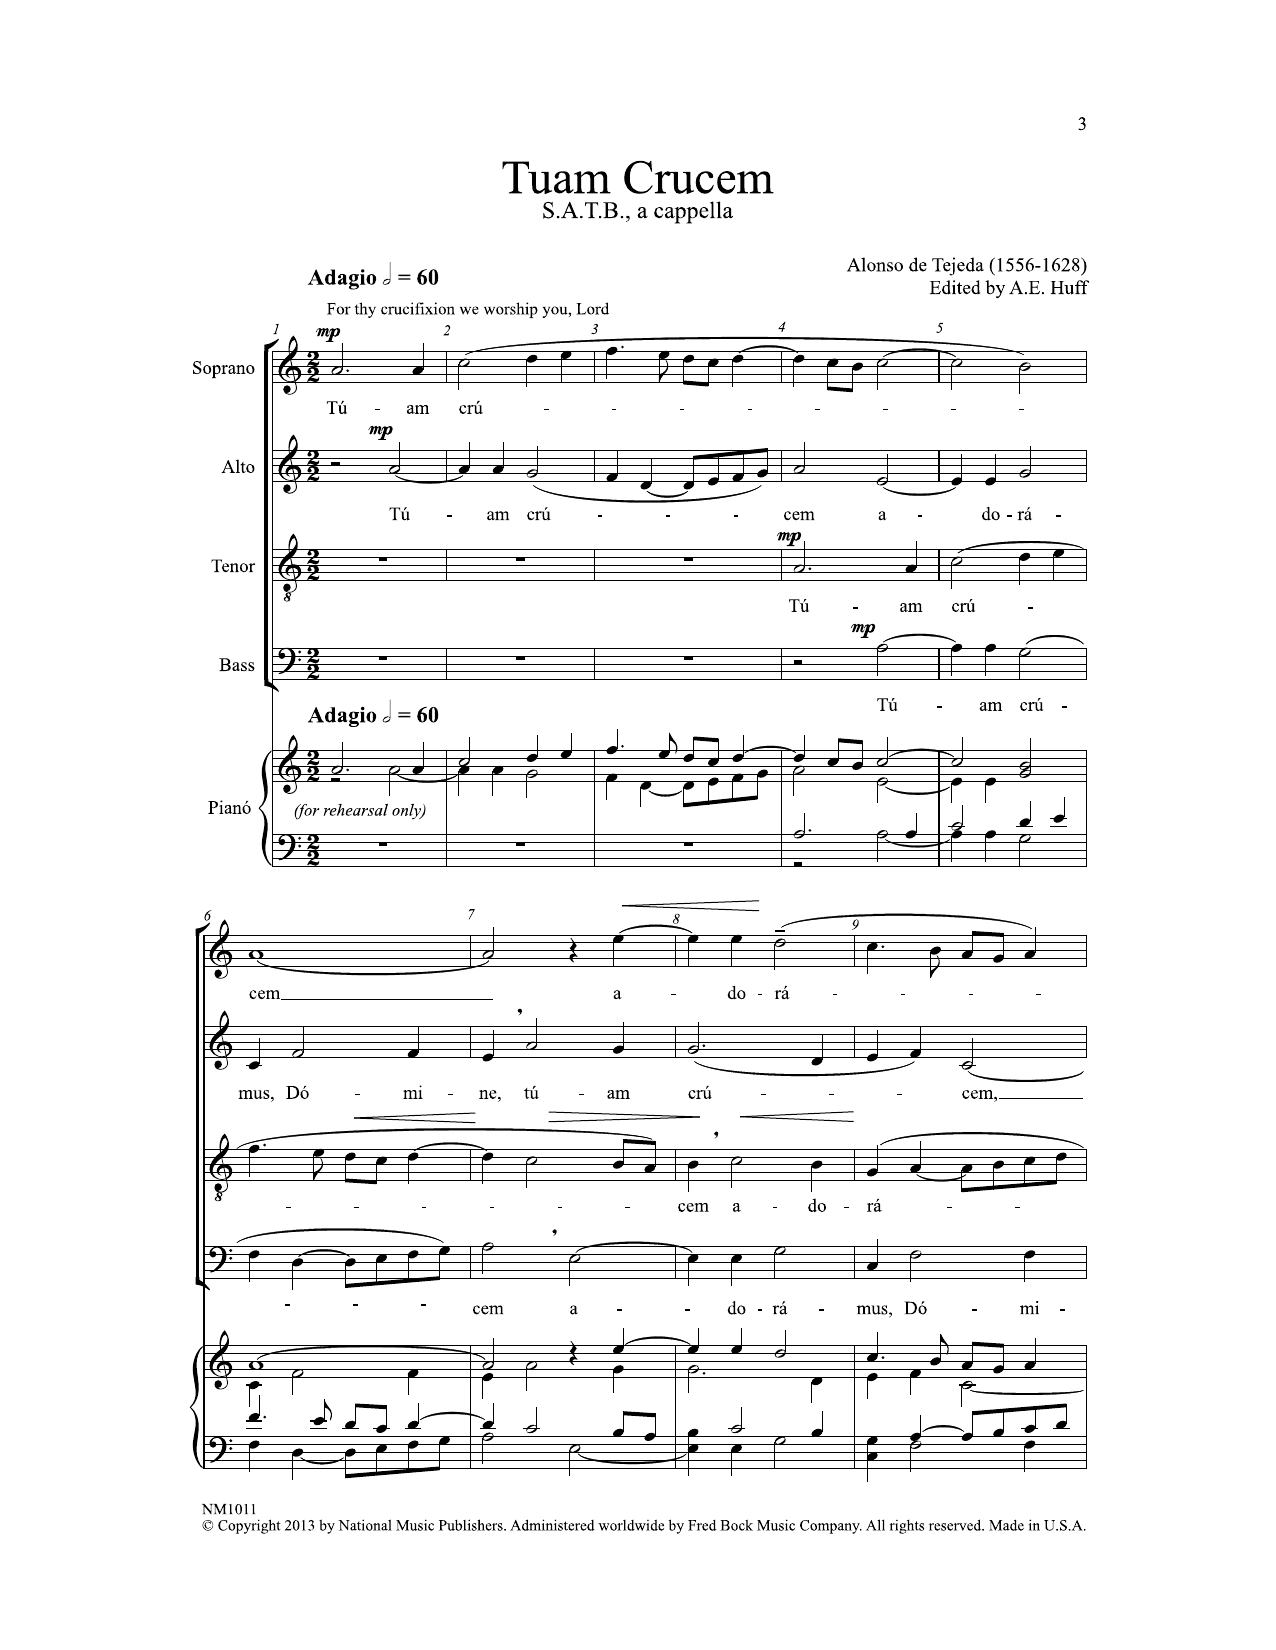 Alonso de Tejeda Tuam Crucem (ed. Arthur E. Huff) Sheet Music Notes & Chords for SATB Choir - Download or Print PDF